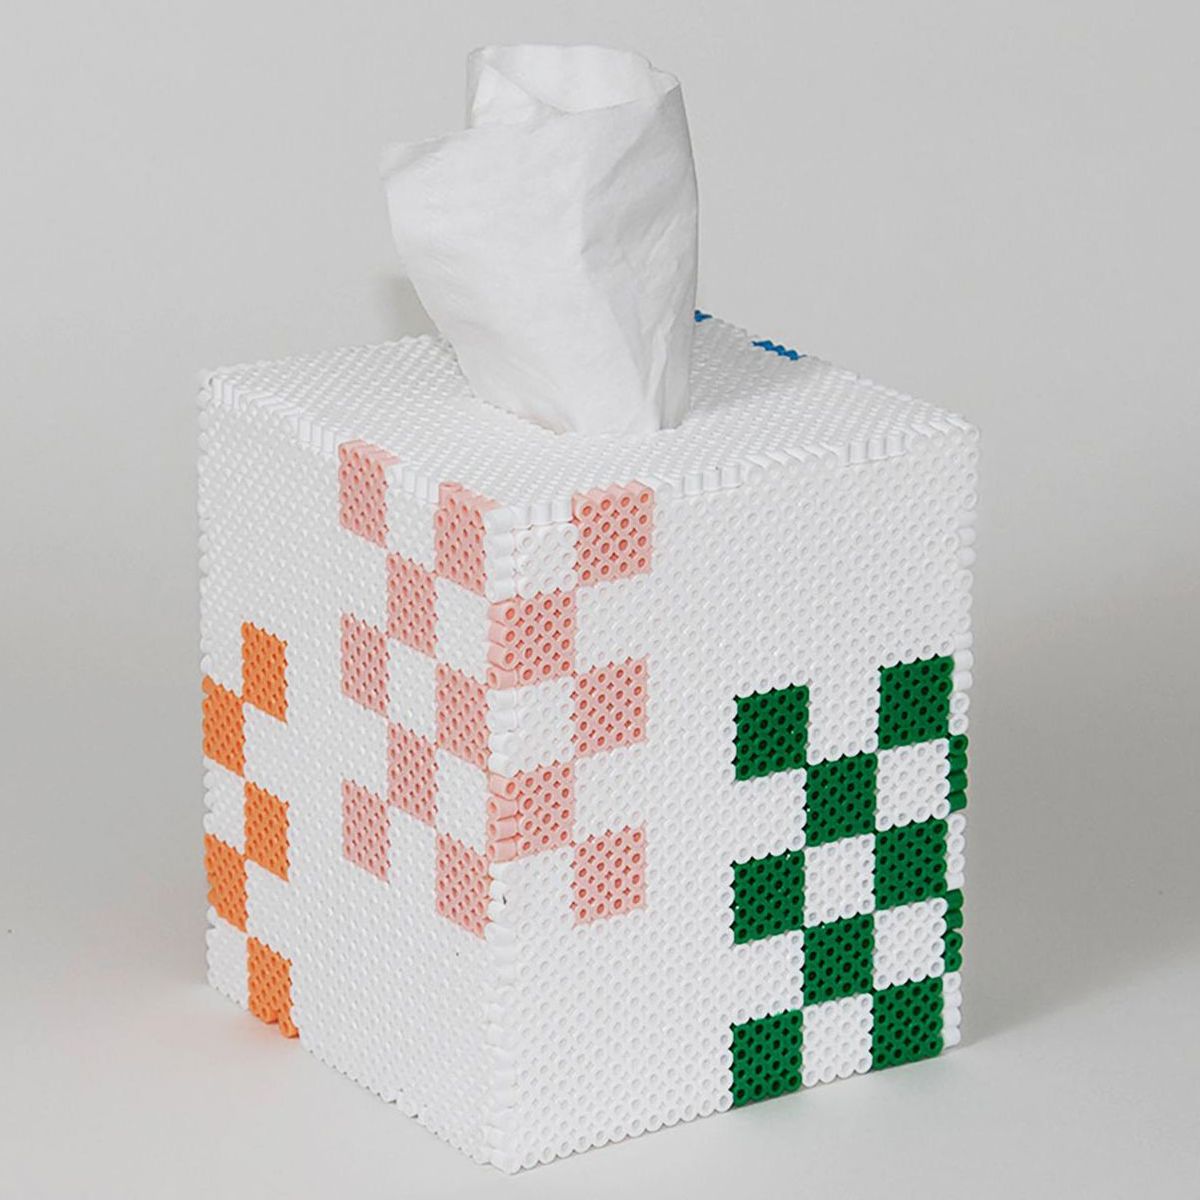 Distressed Gesundheit Tissue Box Cover  ~ Kleenex ~ Home Decor ~ Choose Colors 